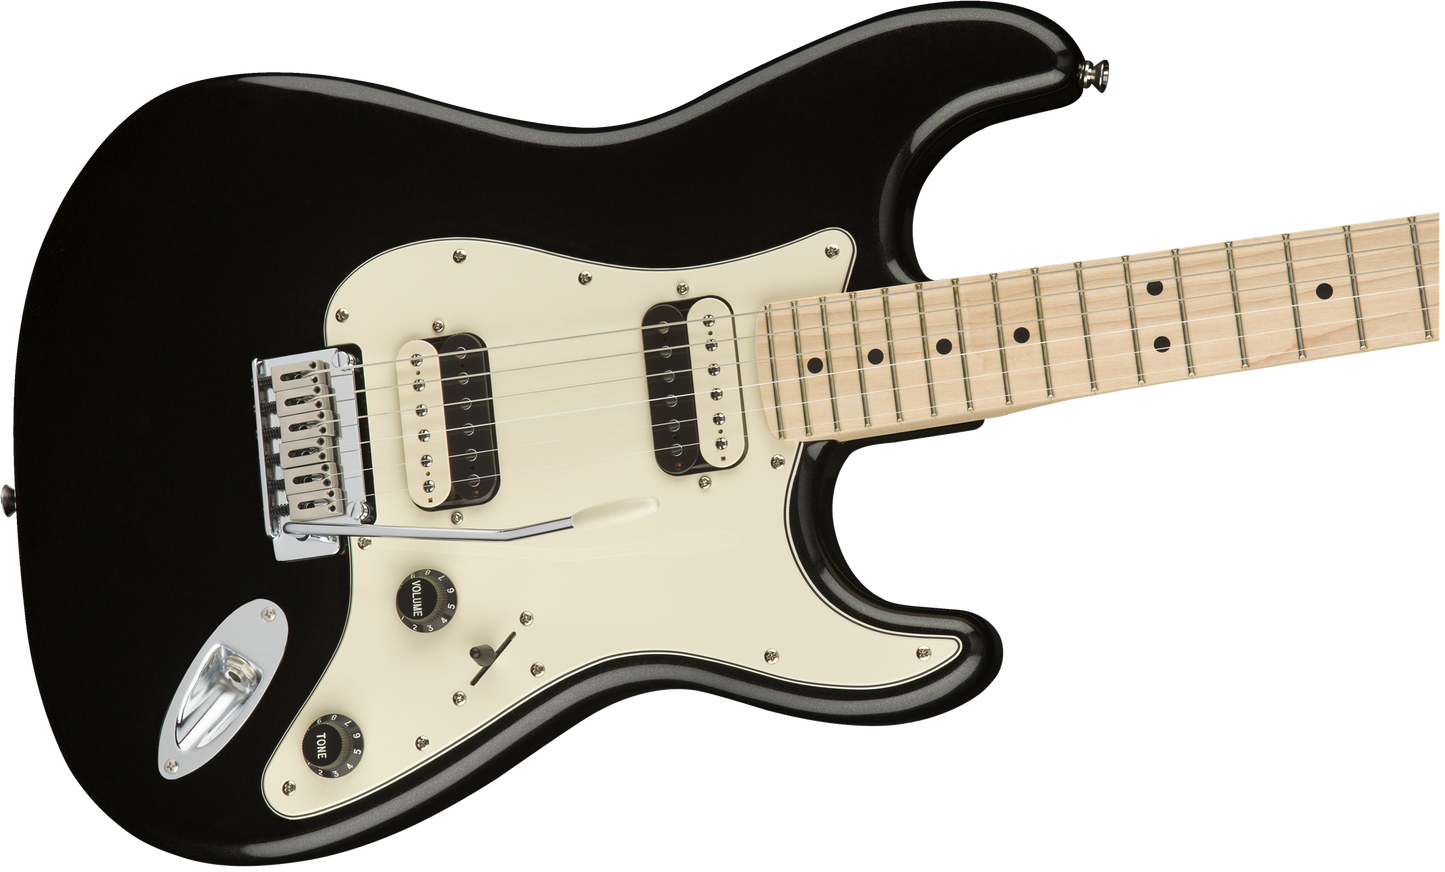 Fender Squier Contemporary Stratocaster® HH